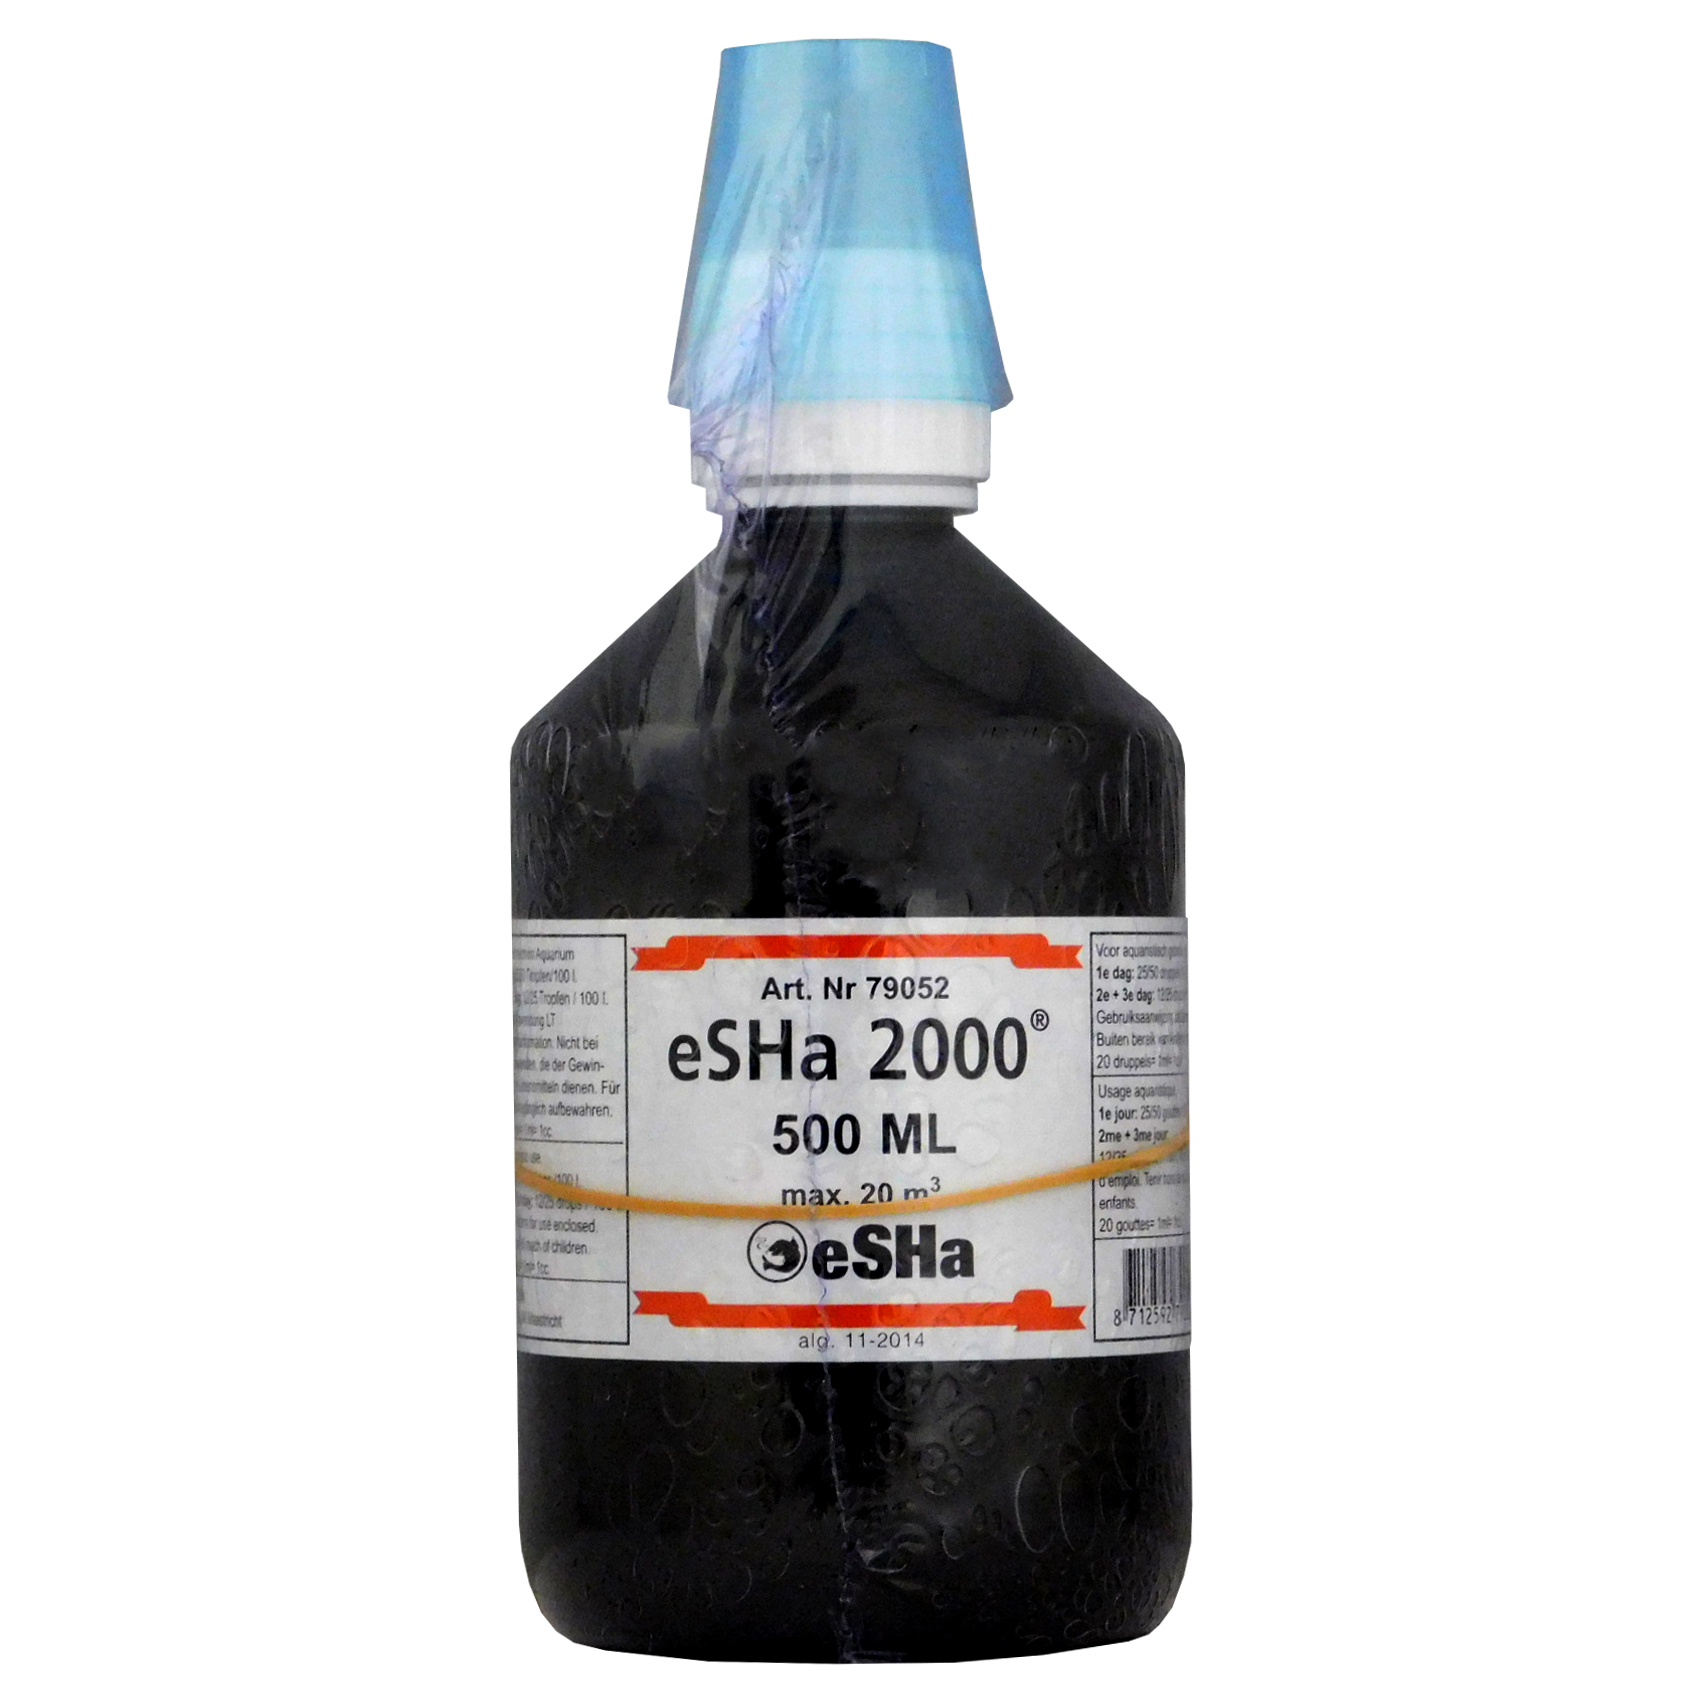 eSHa 2000 - Fungus, Finrot and Bacteria Treatment